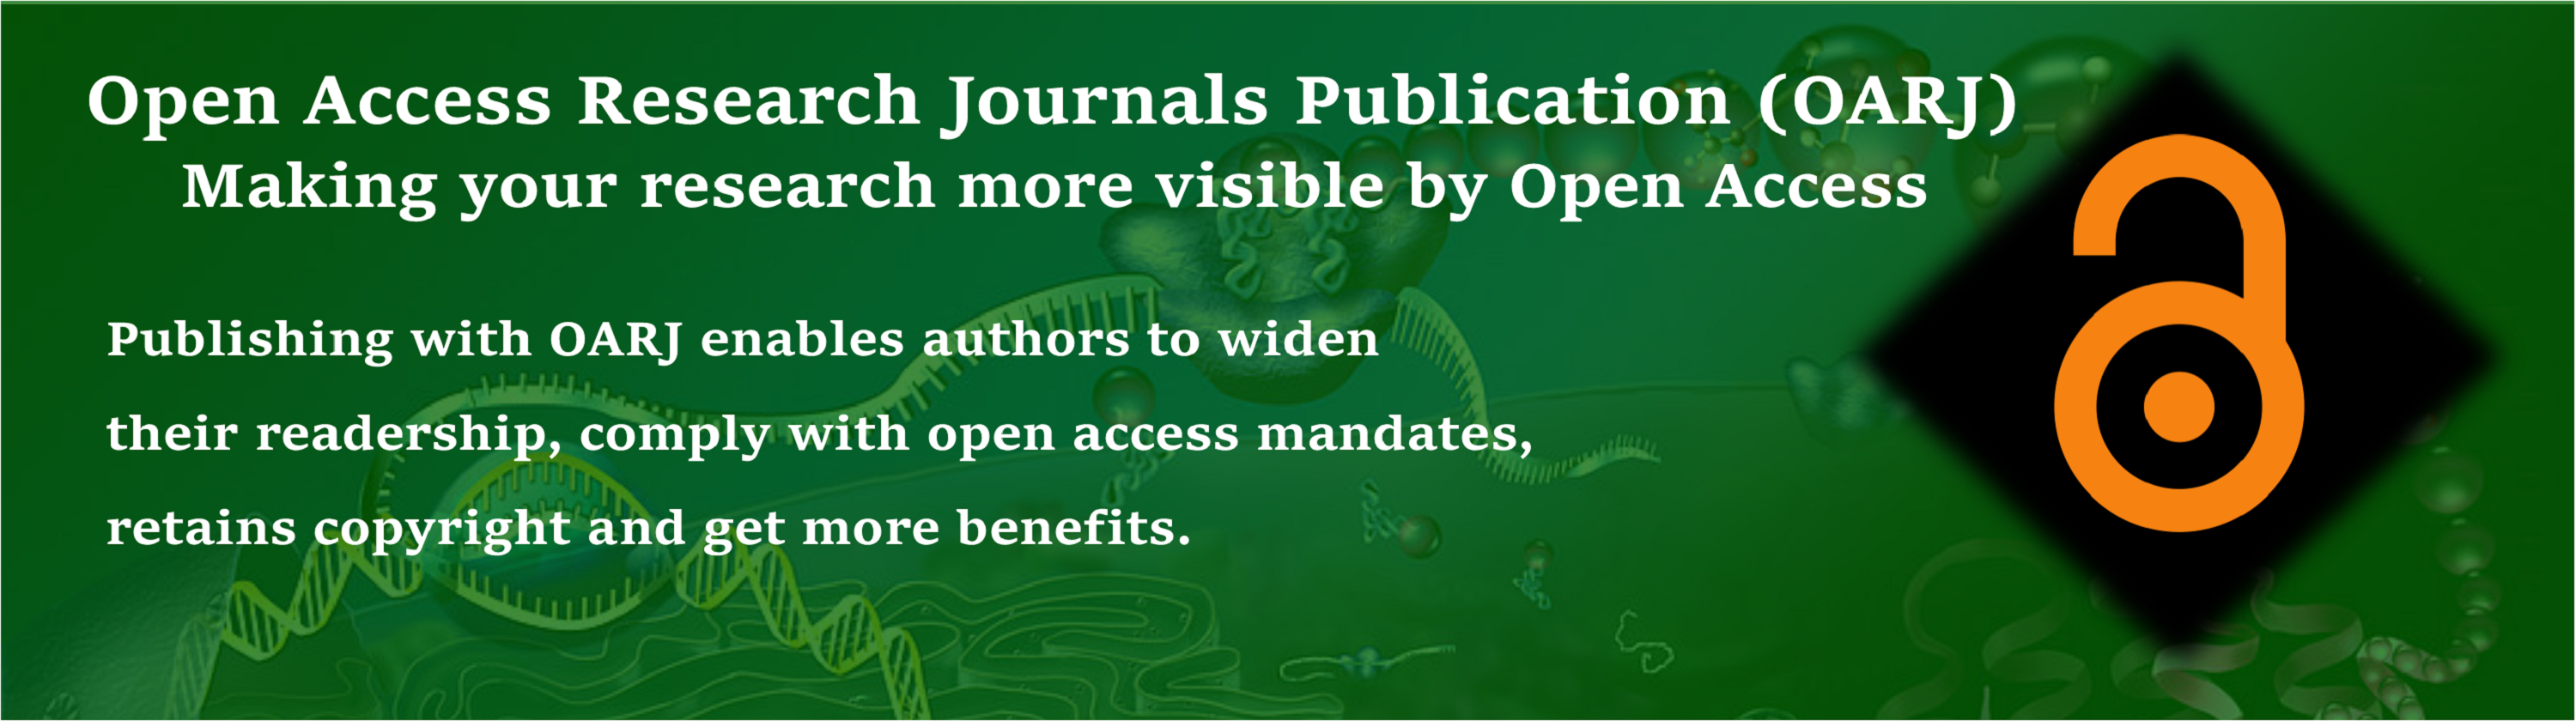 open access research studies